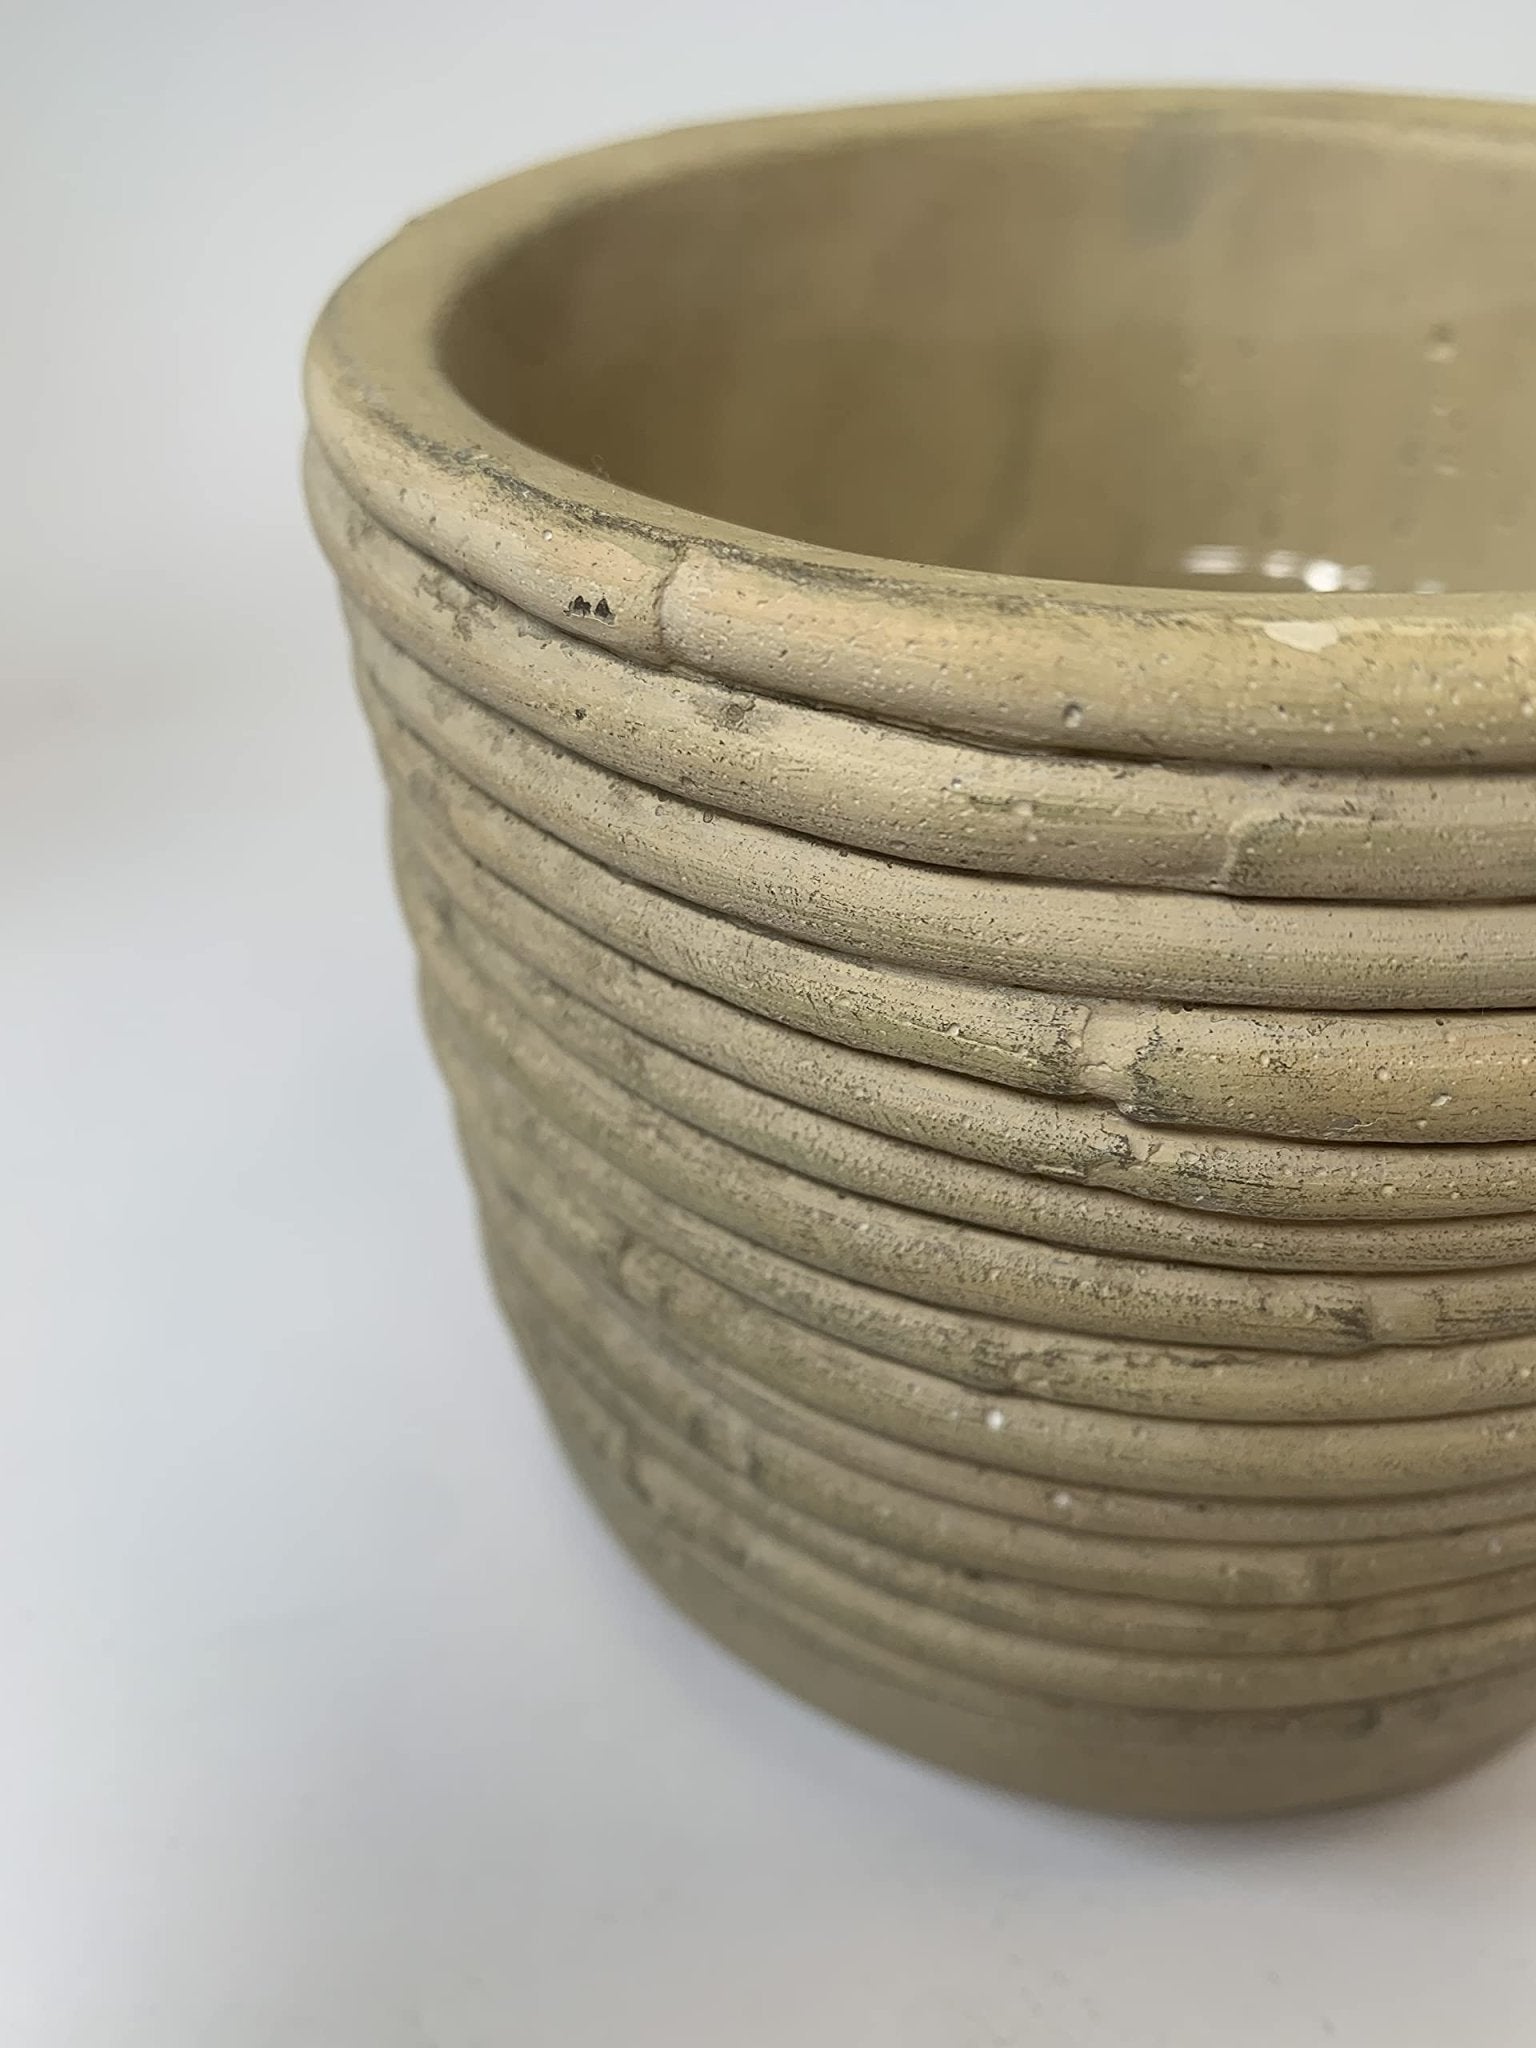 Ceramic Pot - 'Myanmar' - Bamboo Brown - 22cm Diameter x 20cm Height - AcquaGarden